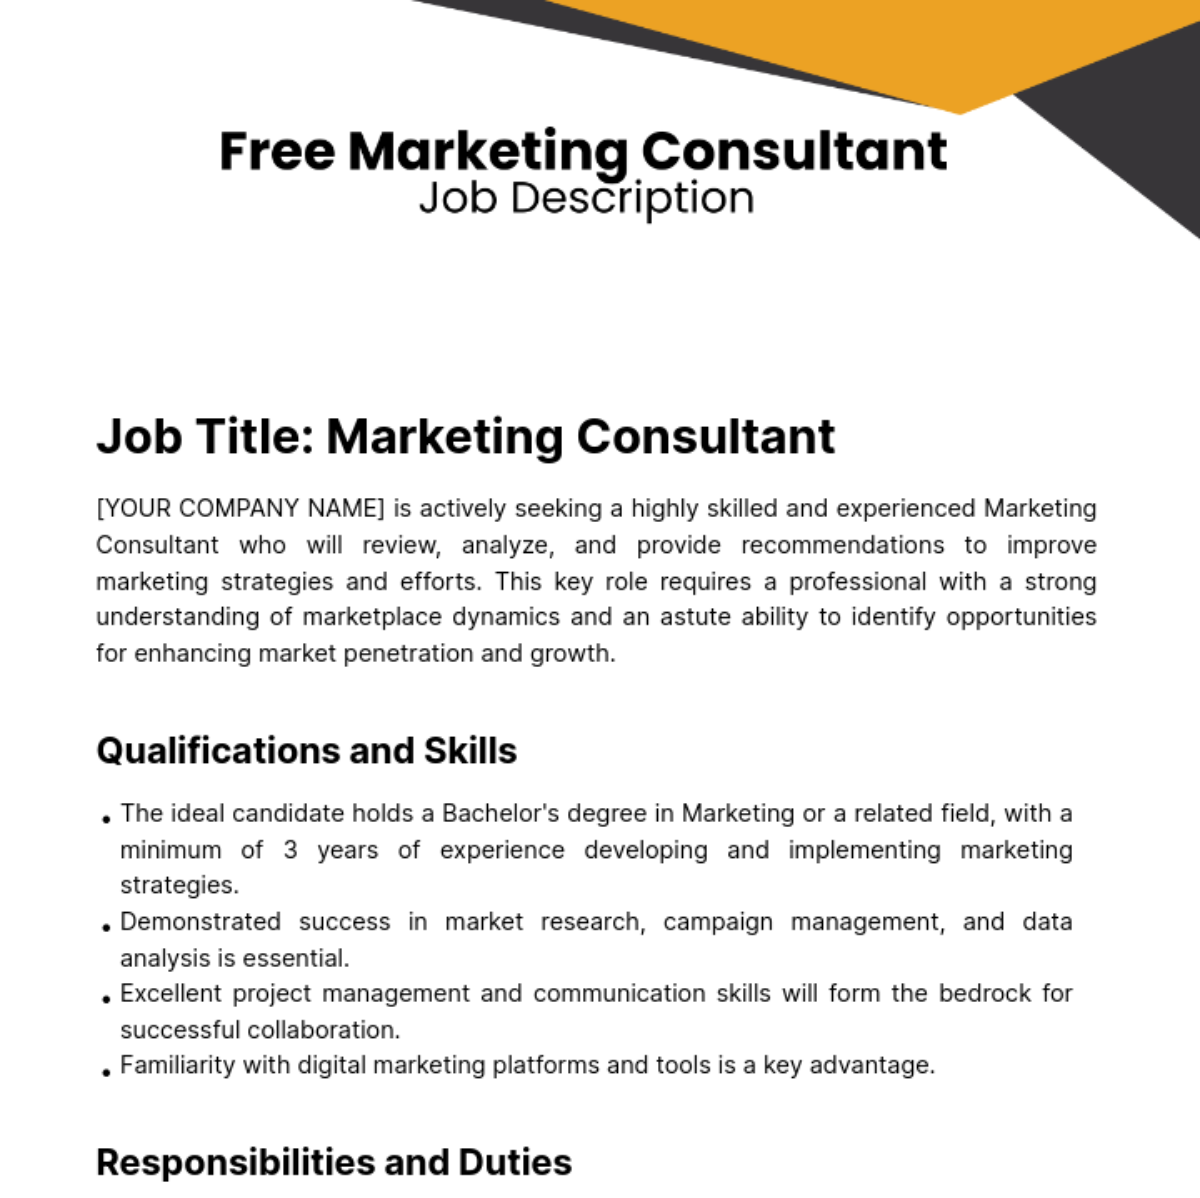 Free Marketing Consultant Job Description Template